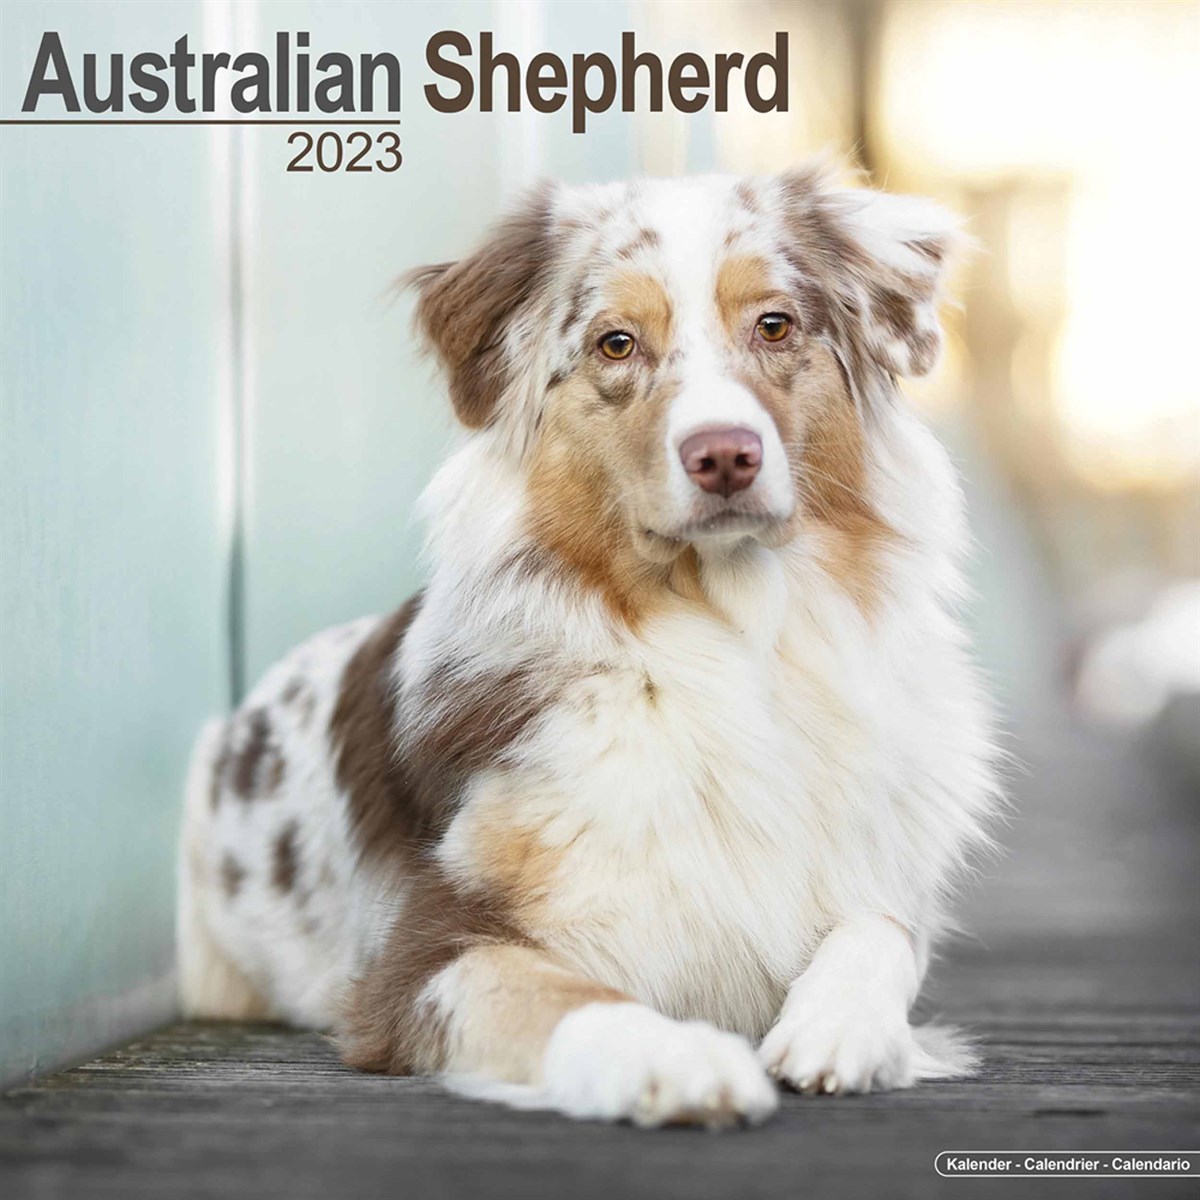 Australian Shepherd 2023 Calendars